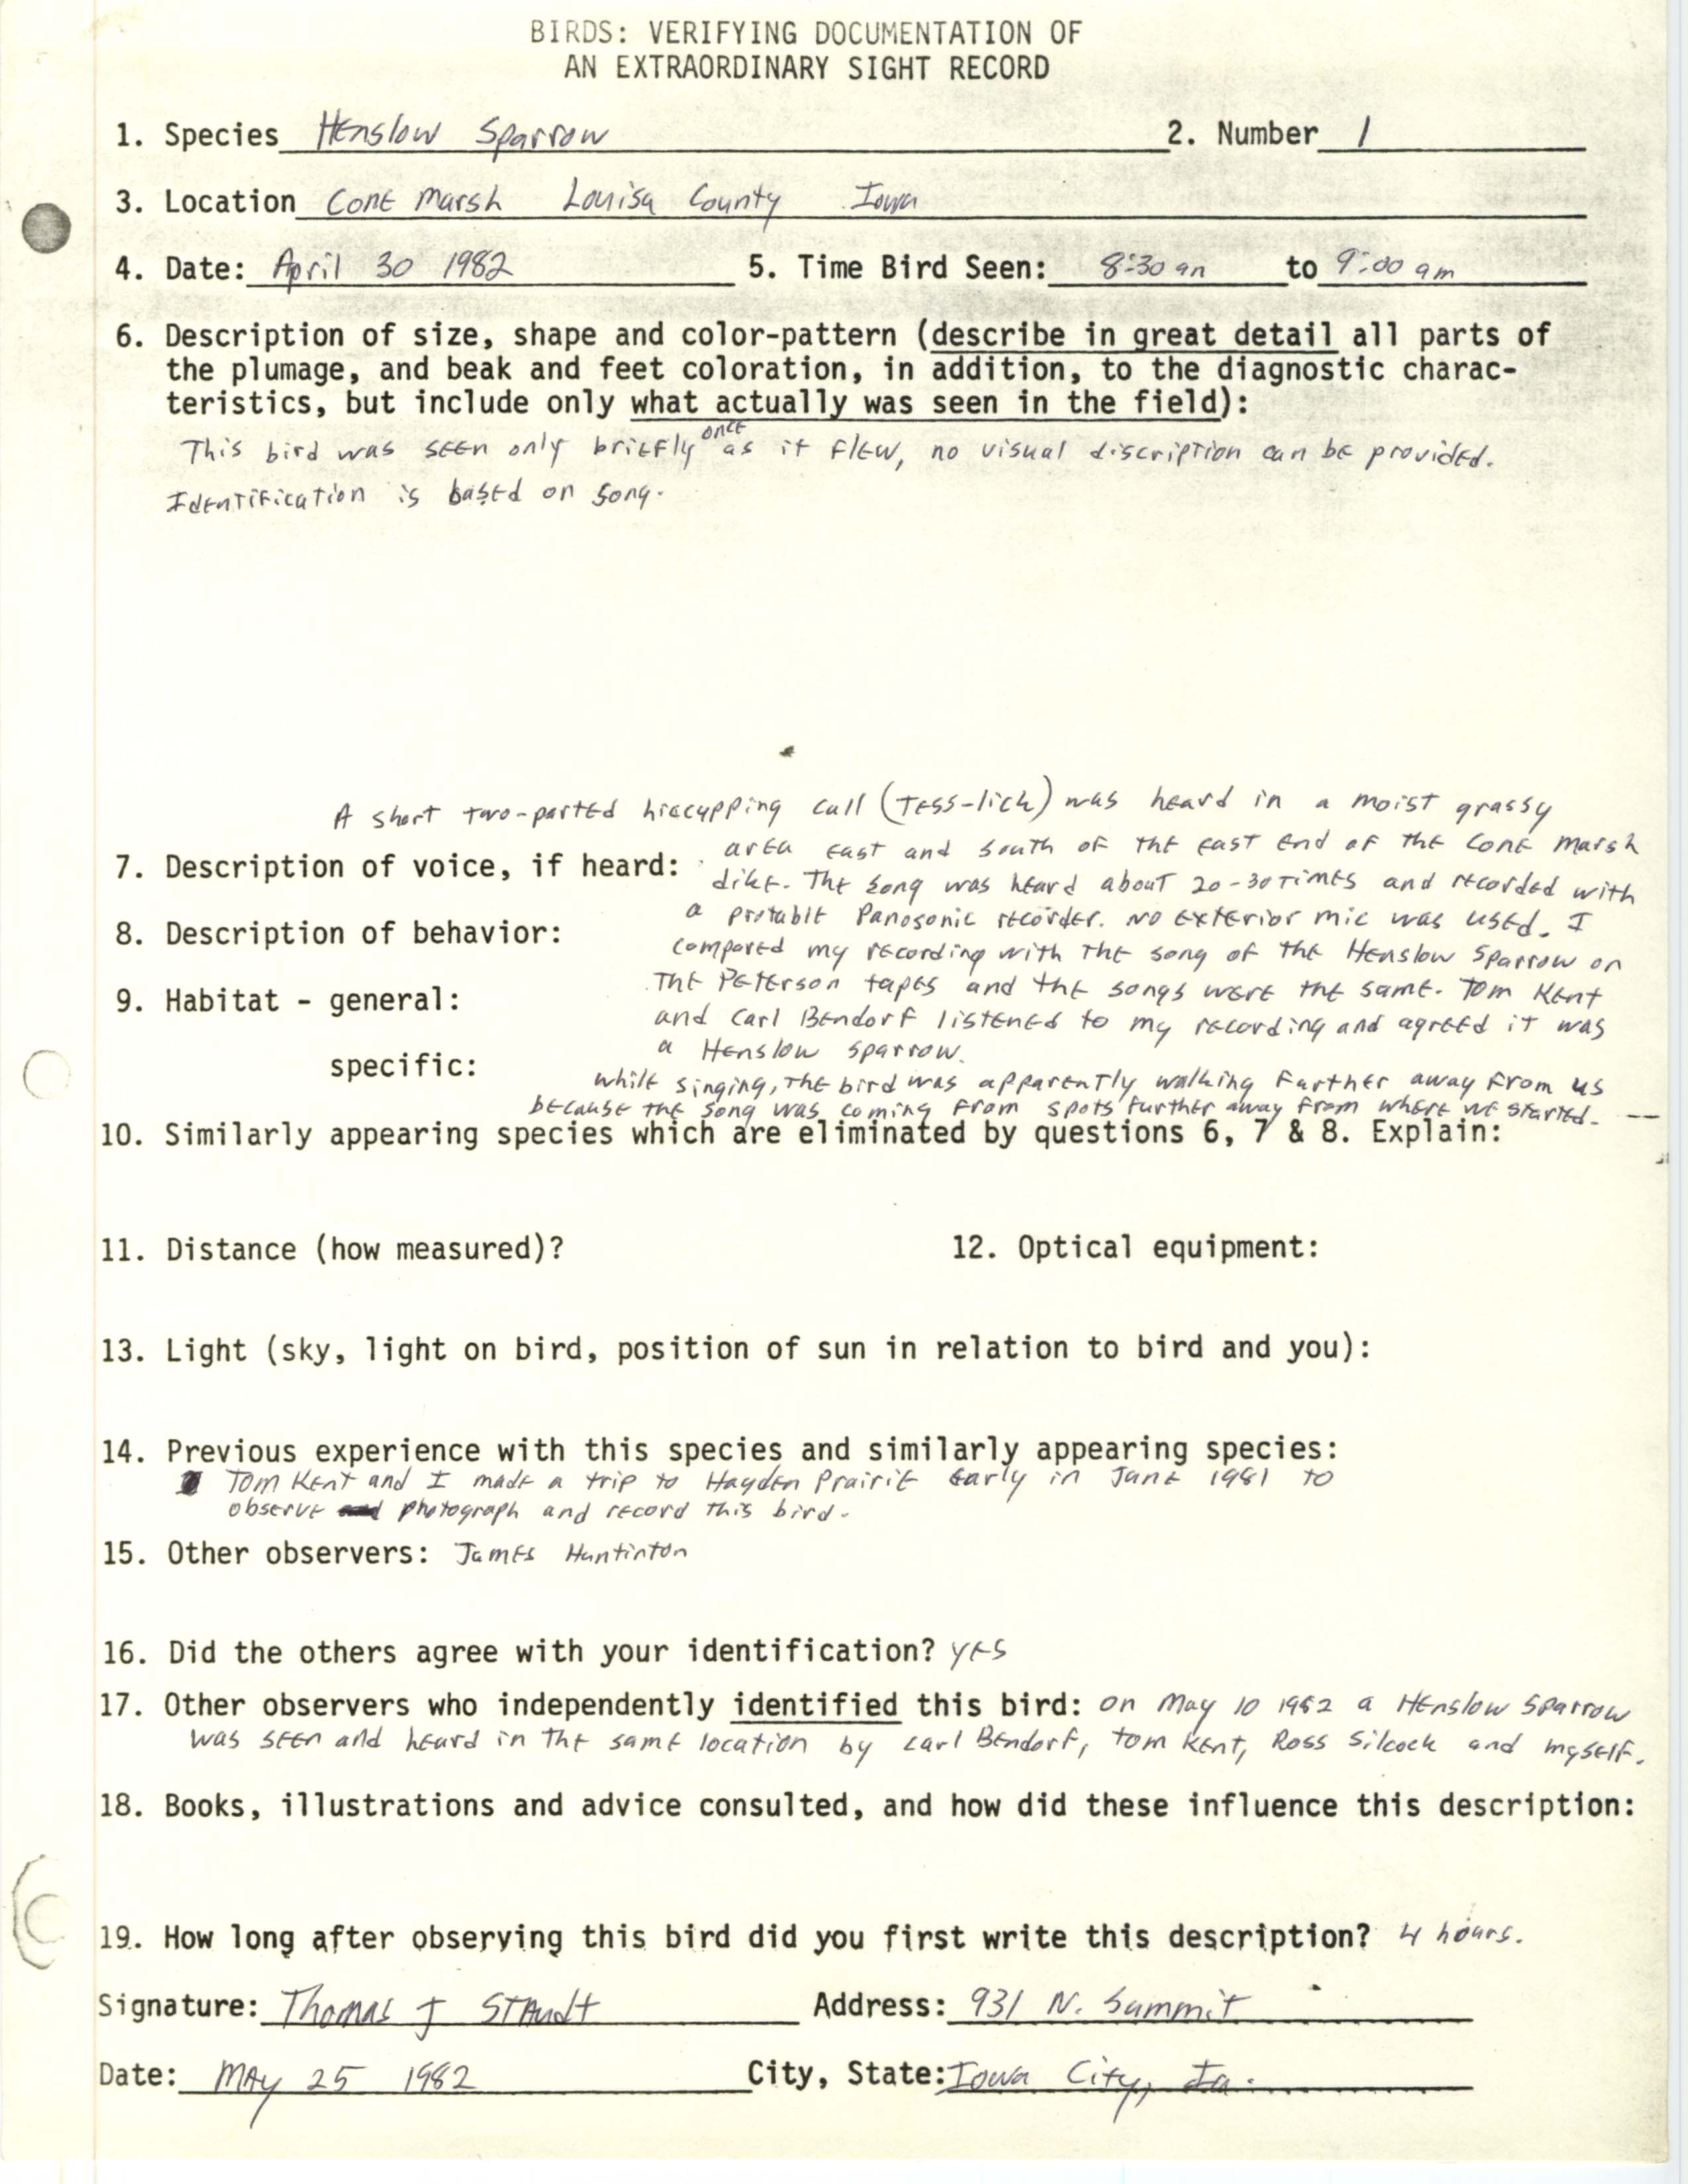 Rare bird documentation form for Henslow's Sparrow at Cone Marsh Wildlife Management Area, 1982